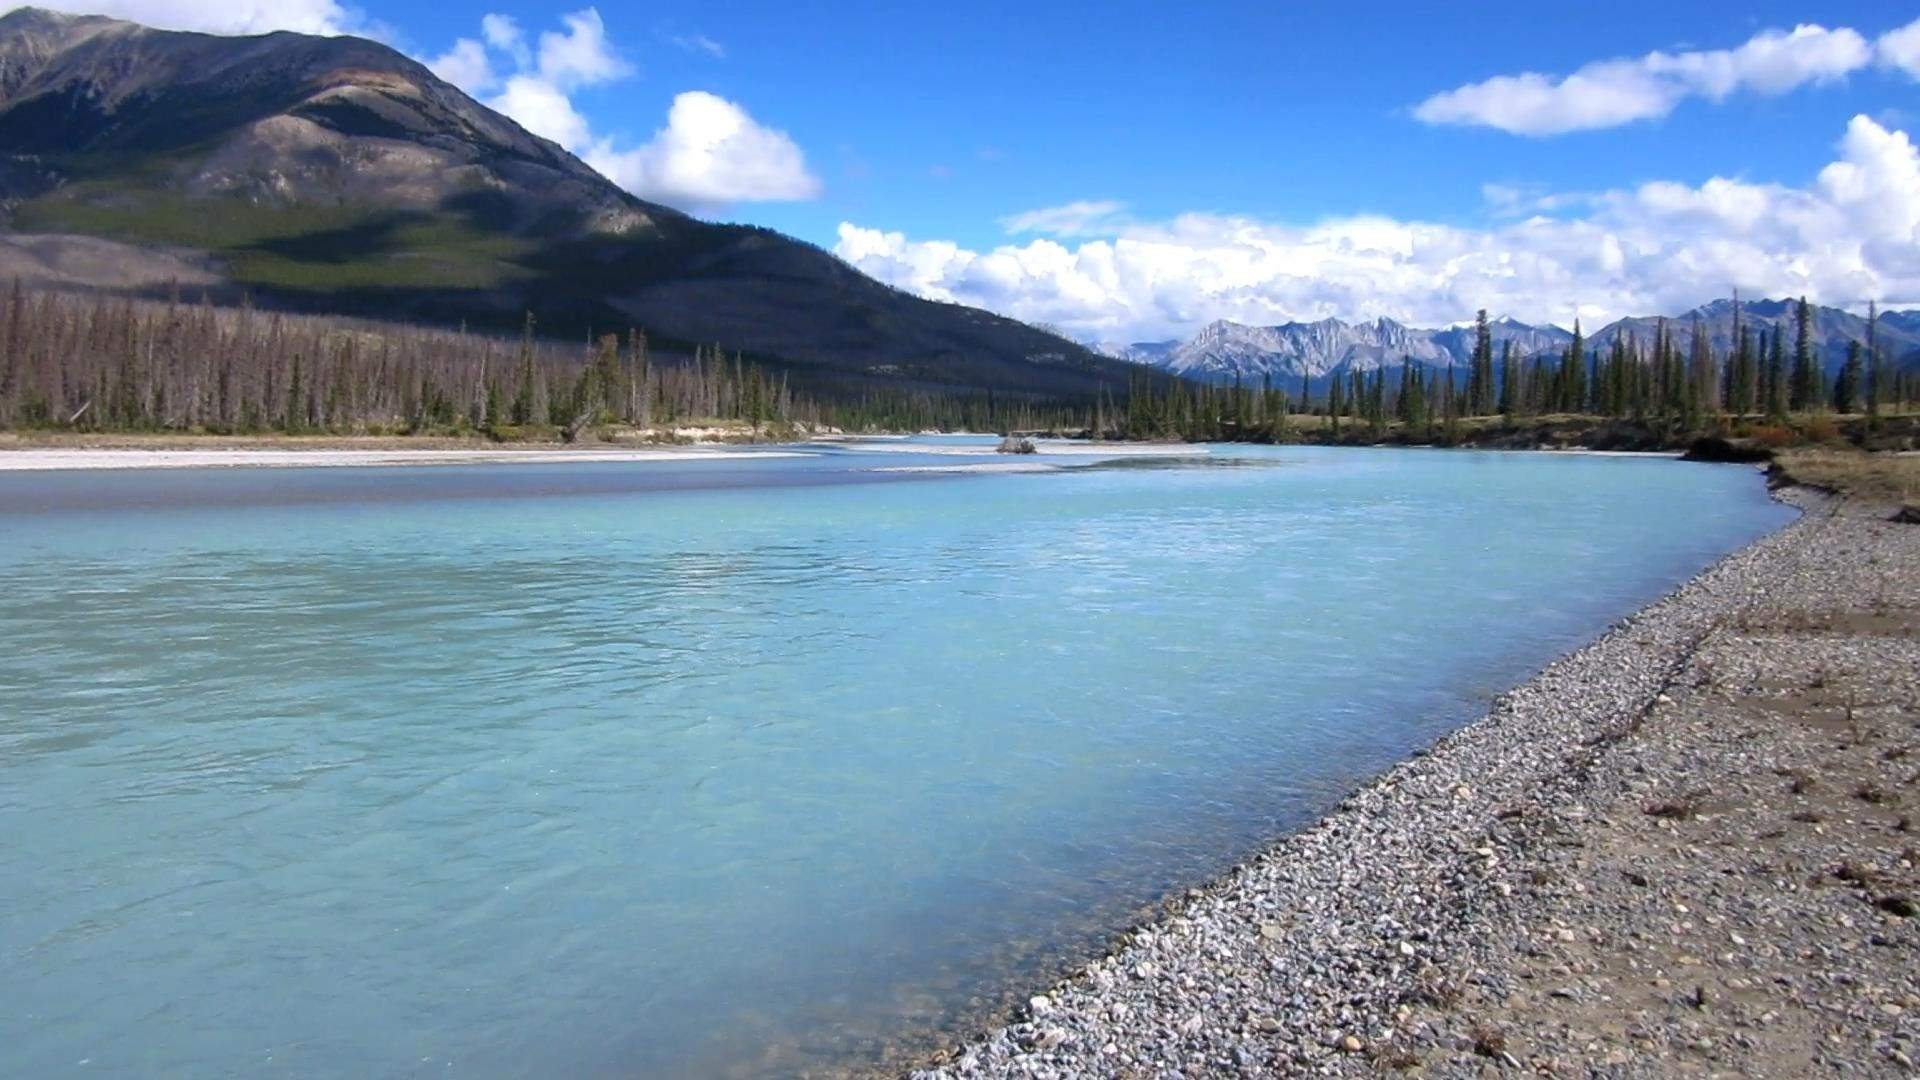 Saskatchewan River, Landscape wallpaper, HD image, Picture background, 1920x1080 Full HD Desktop